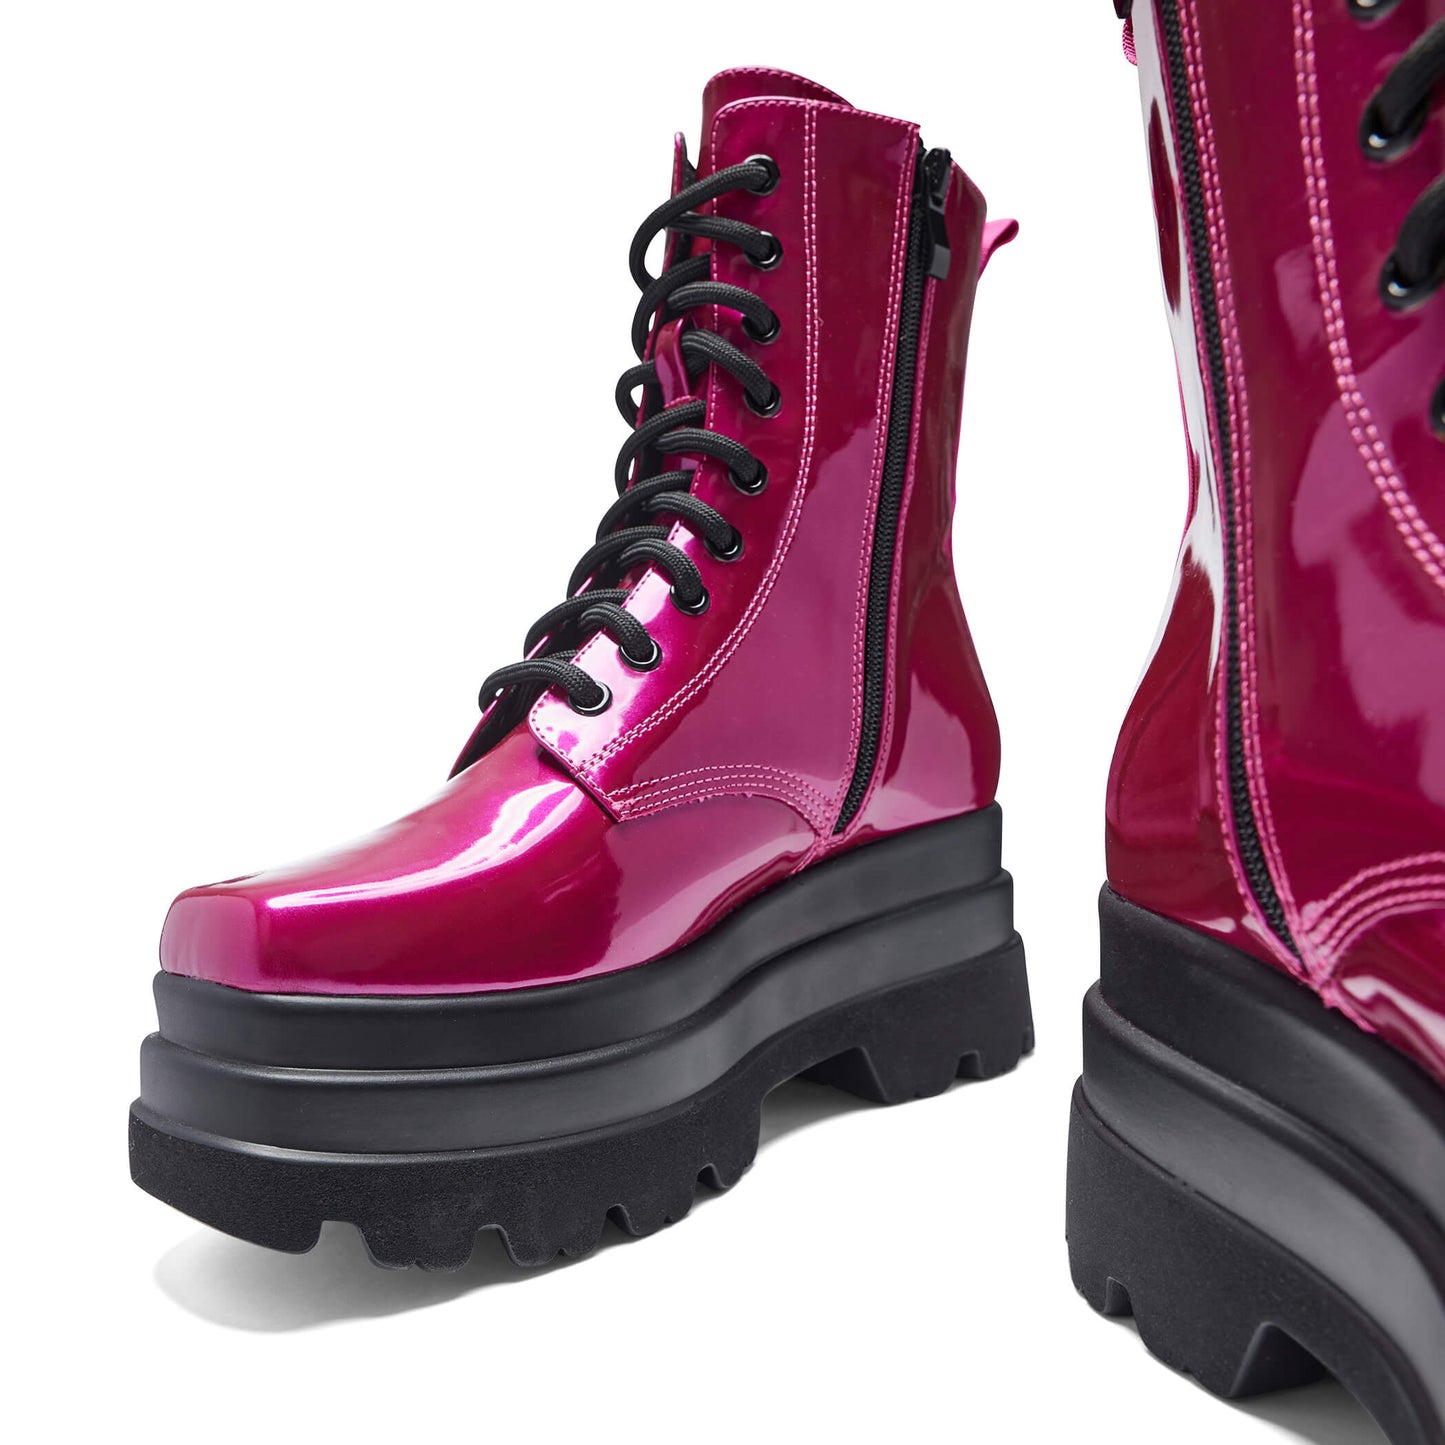 Deathwatch Trident Platform Boots - Candy Pink - KOI Footwear - Platform View